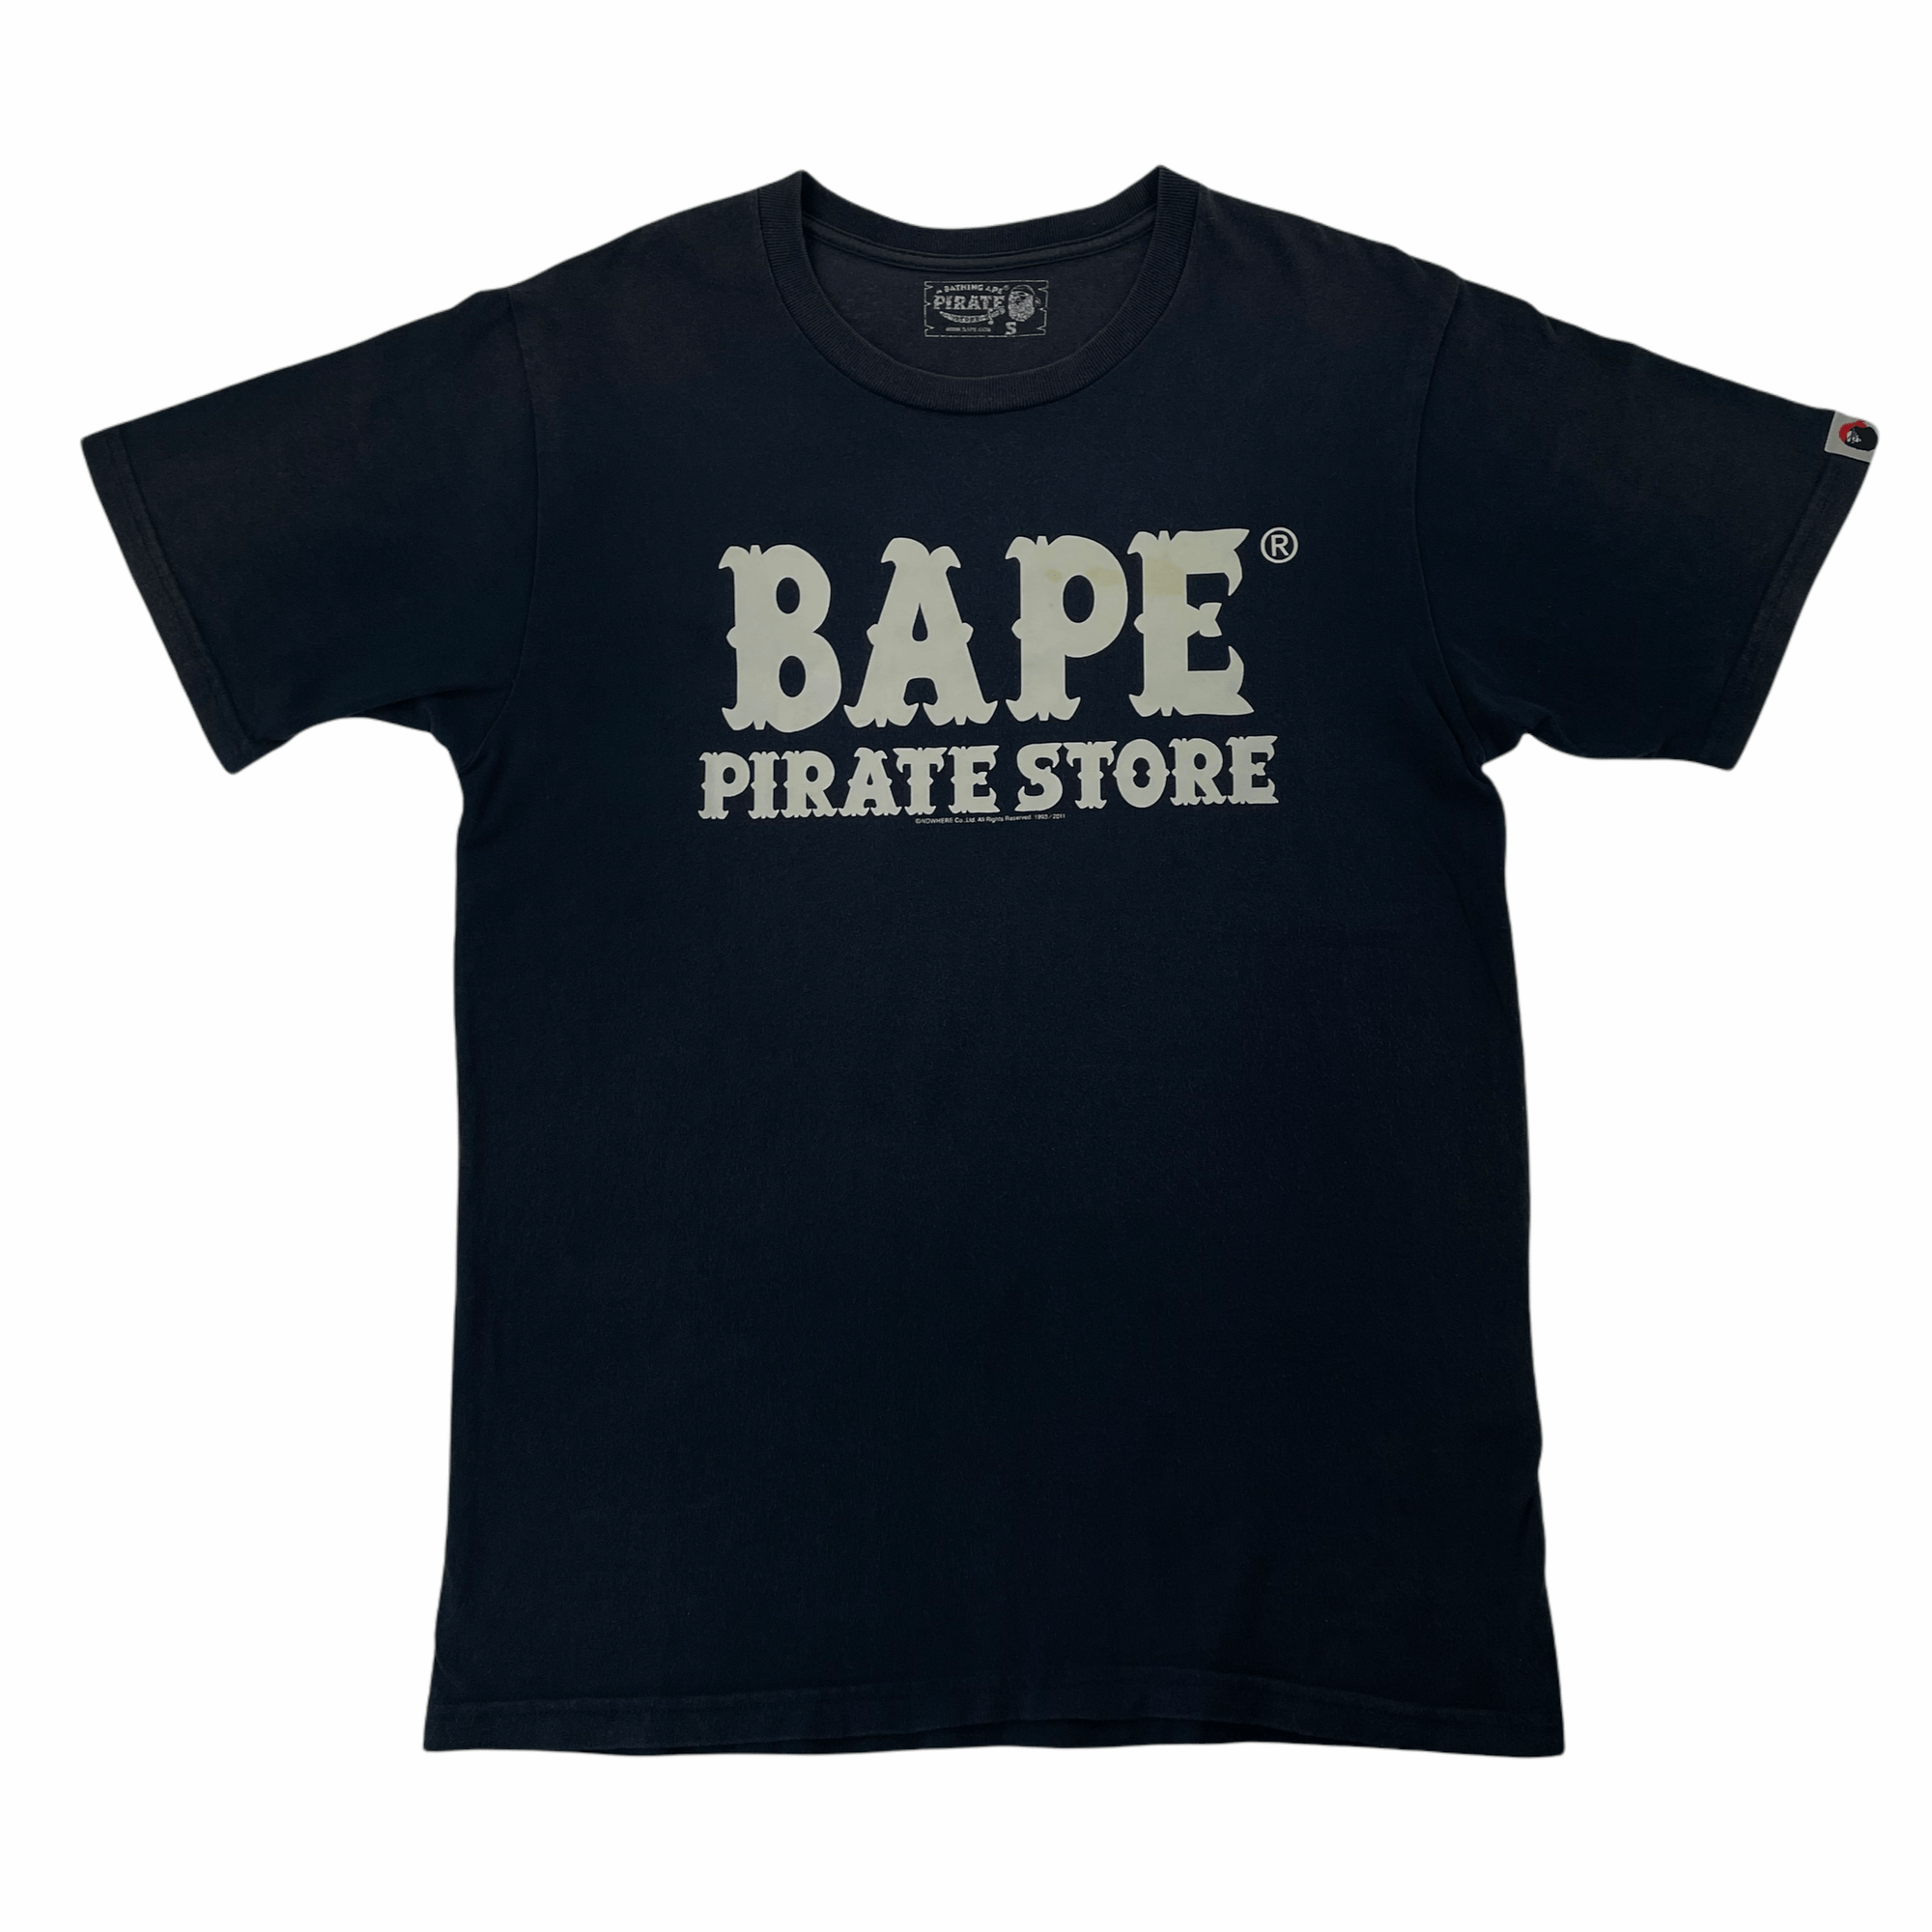 Bape baby milo pirate t shirt size S - second wave vintage store